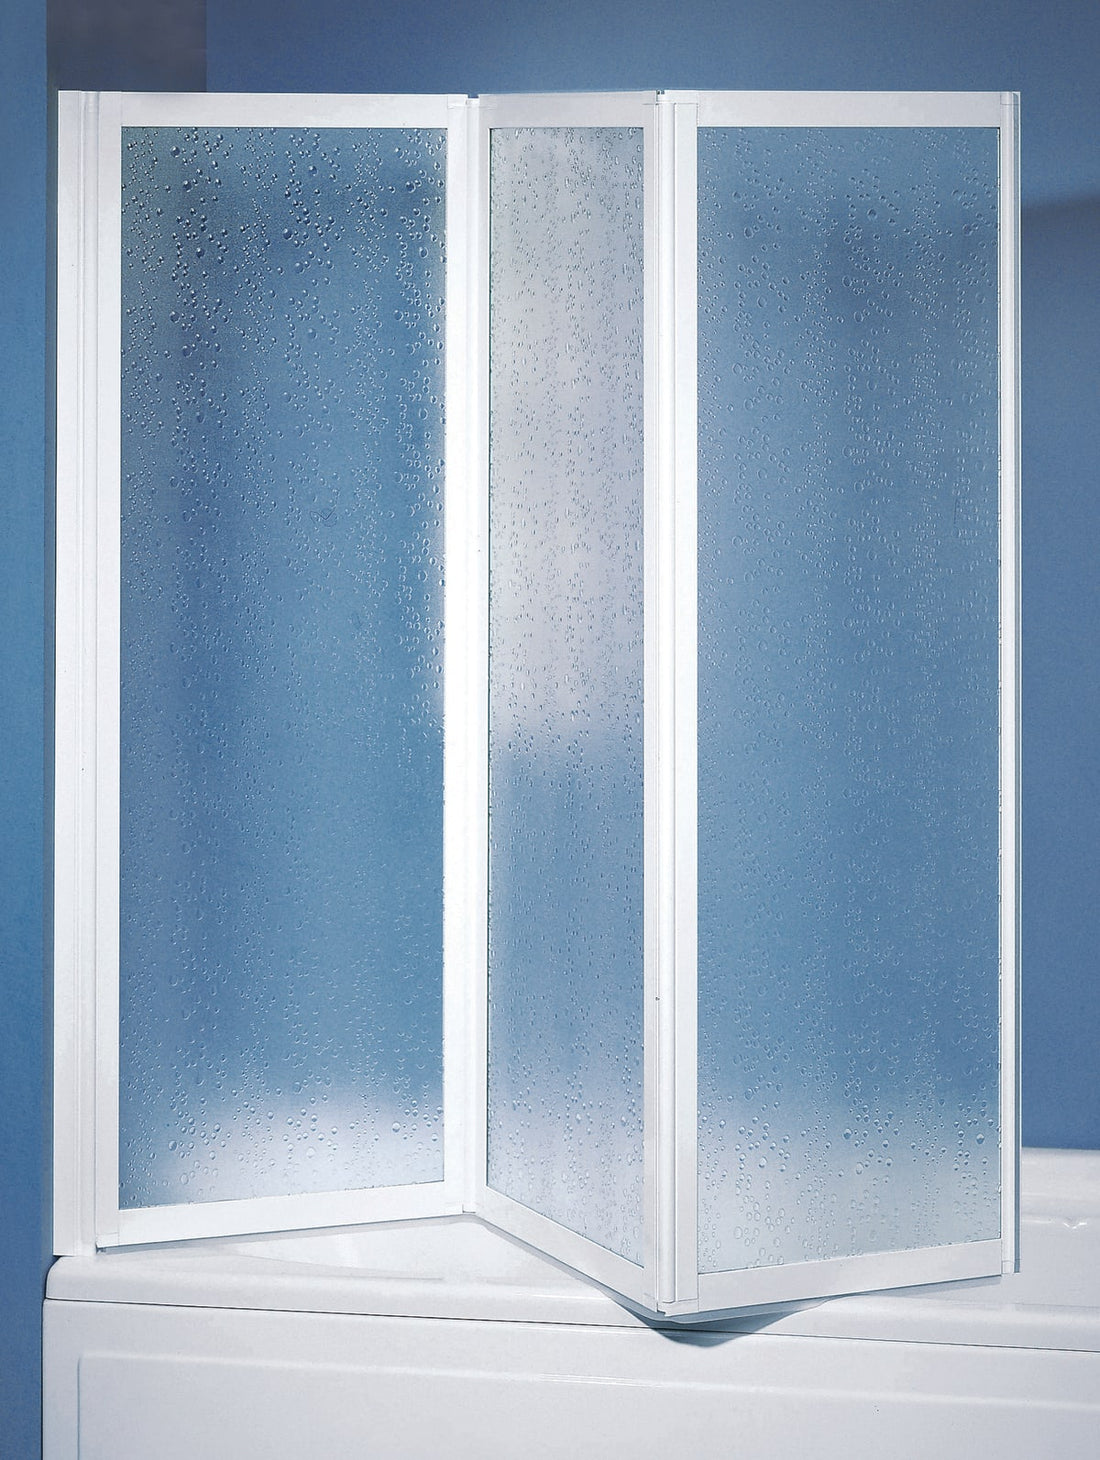 MEDITERRANEAN BATHTUB WALL 3 FOLDING DOORS L 46-135, H 135 CM POLYSTYRENE WHITE